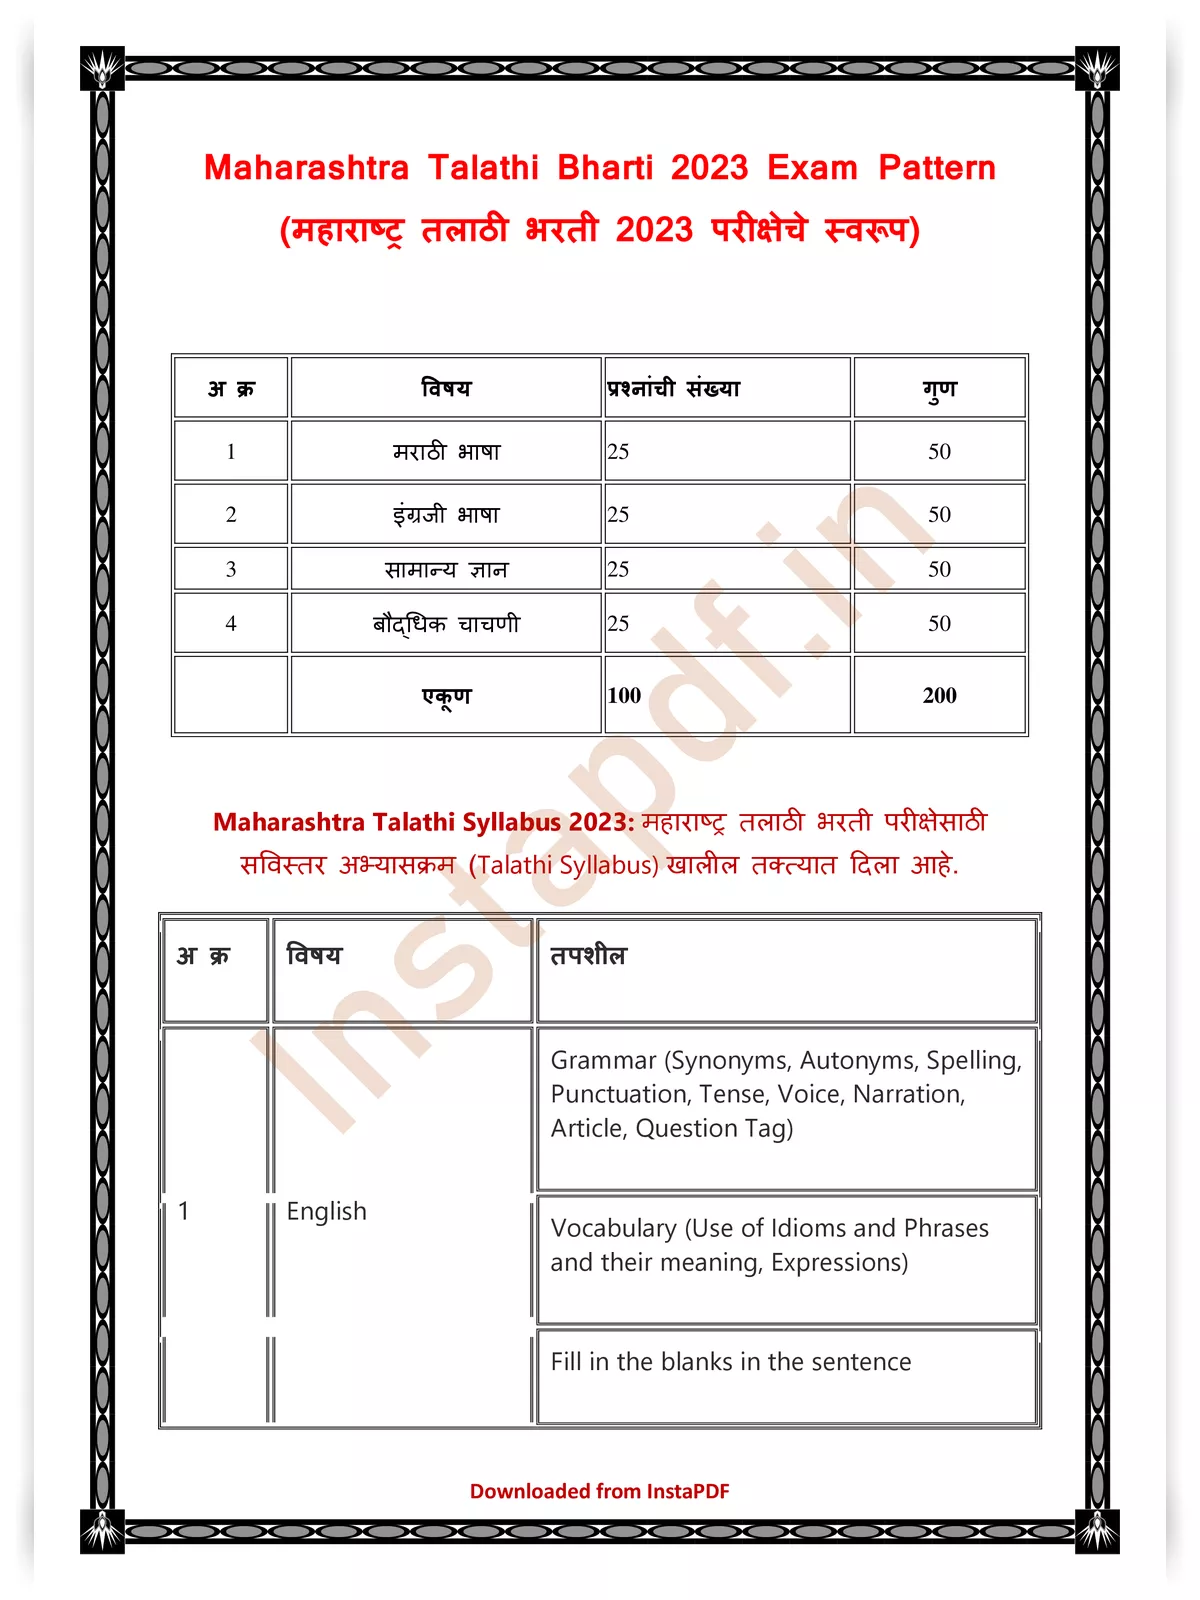 Maharashtra Talathi Bharti Syllabus 2023